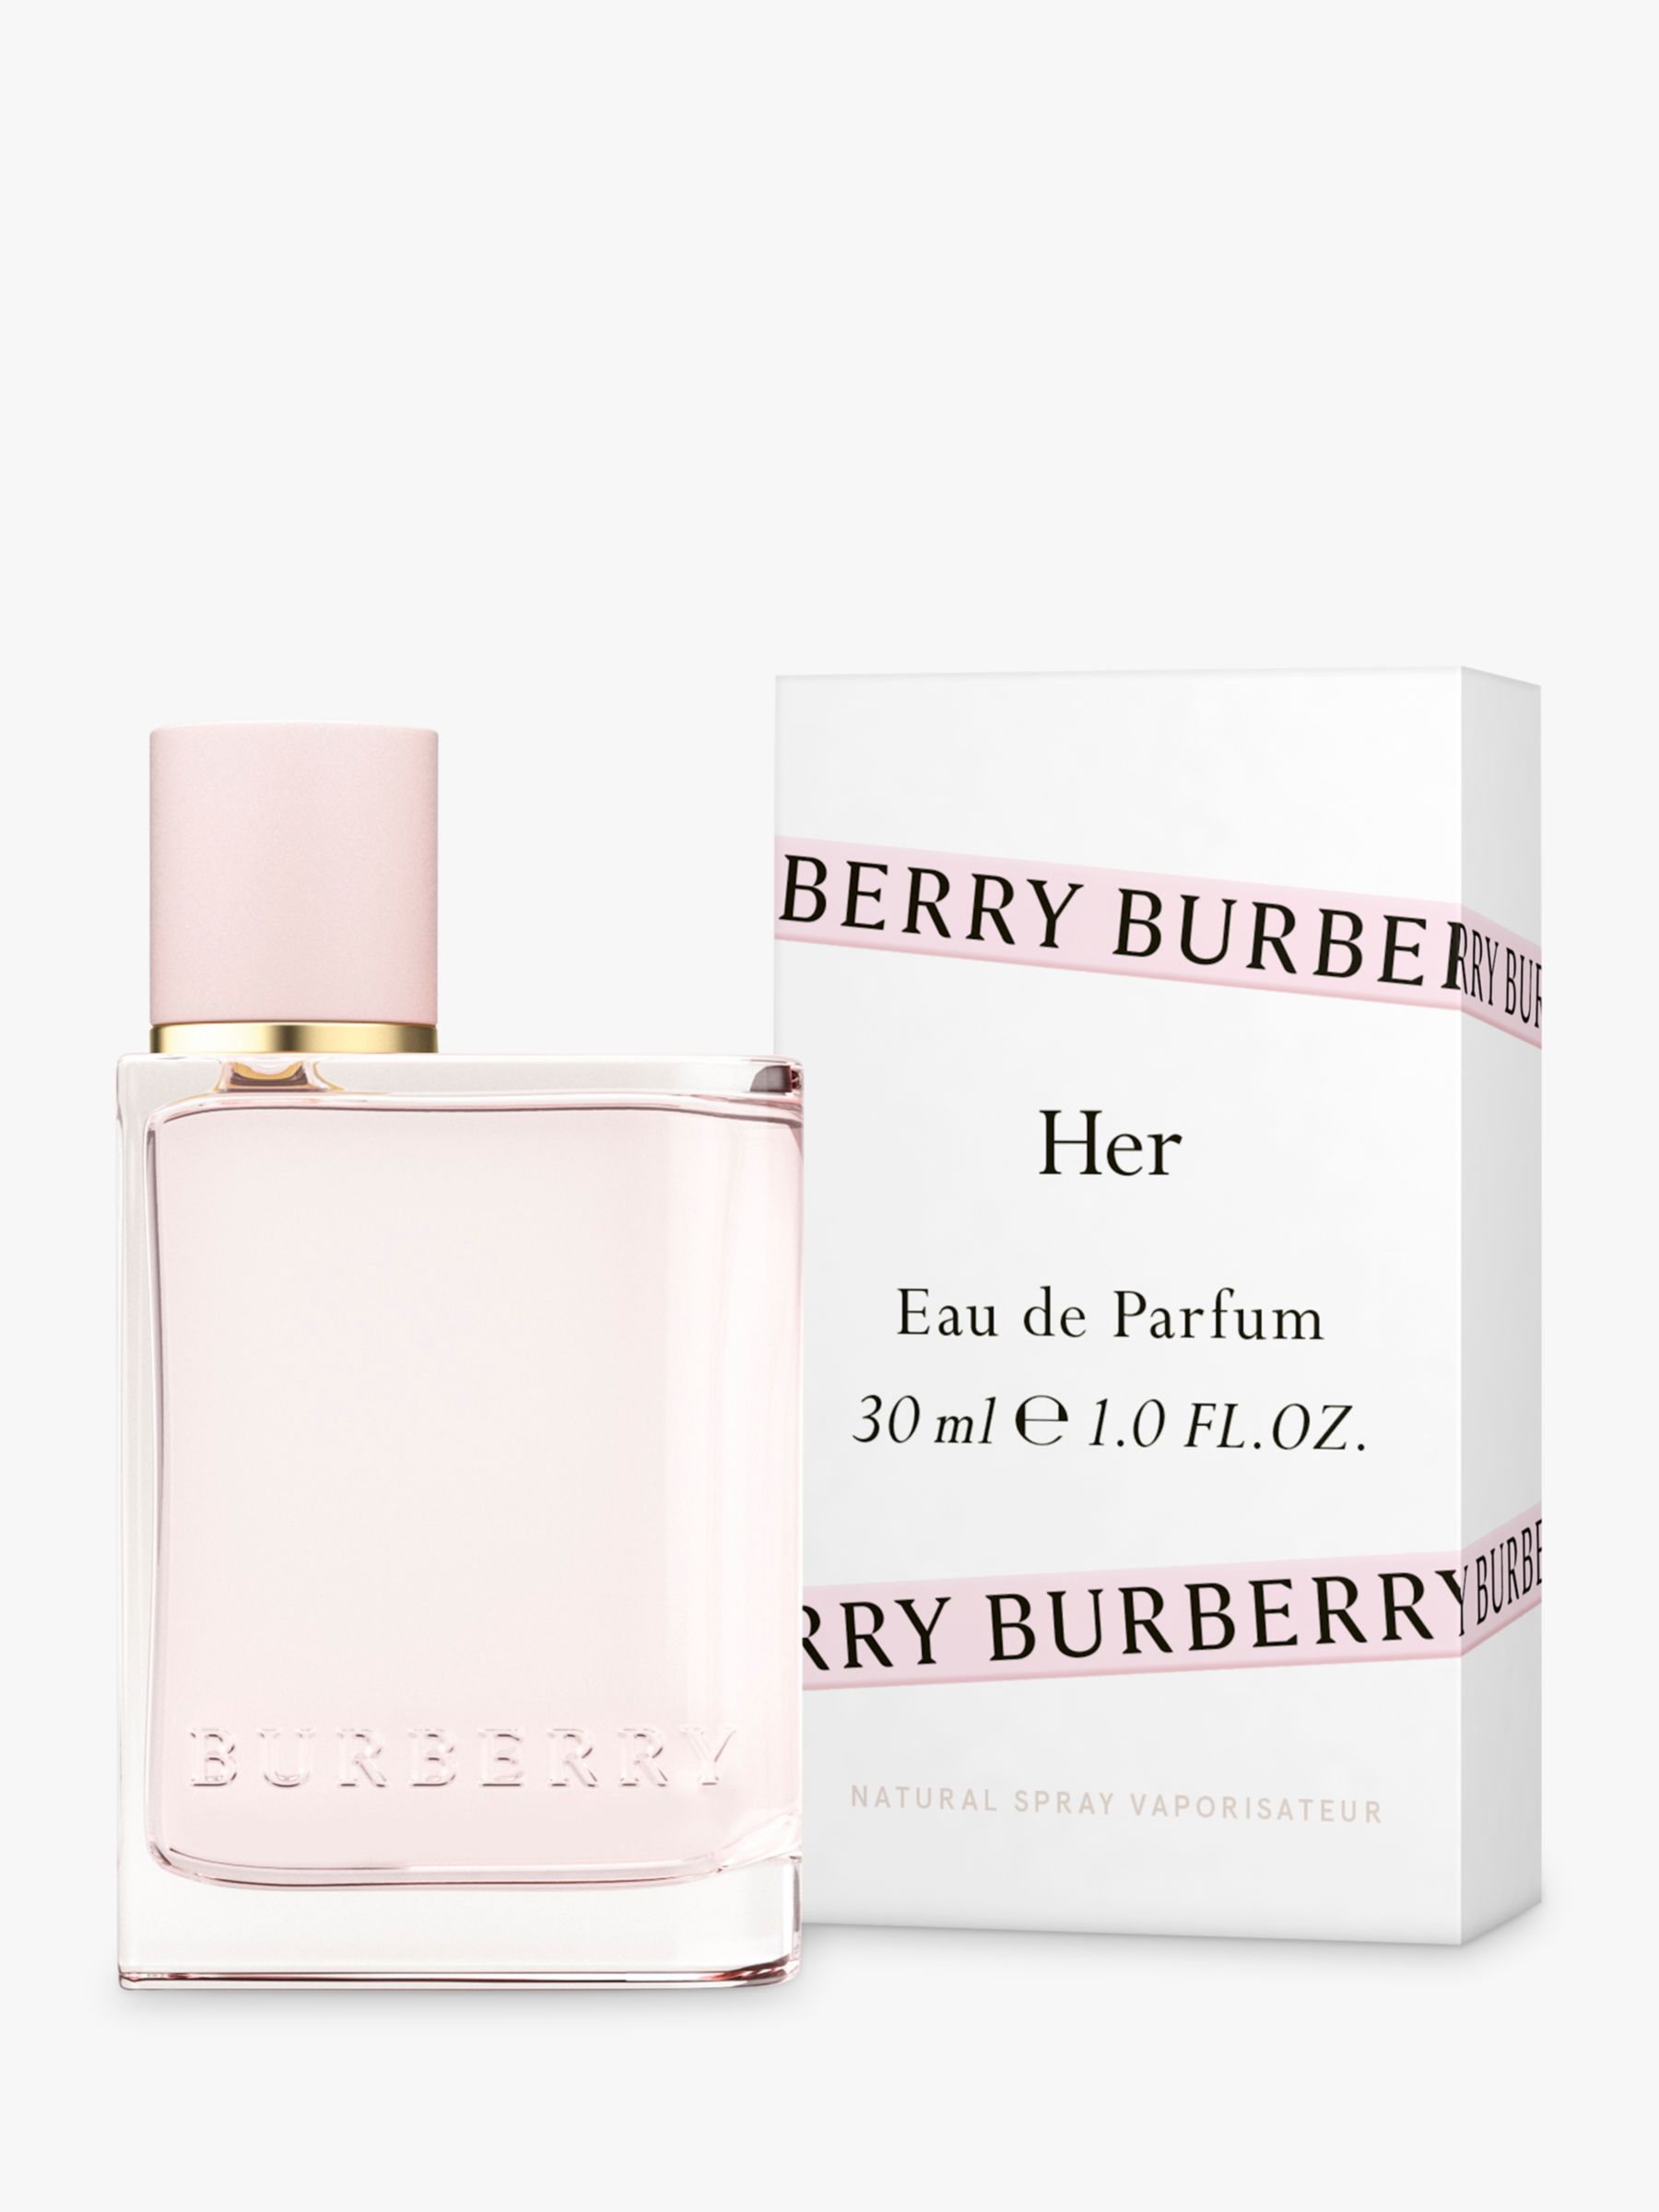 burberry parfum